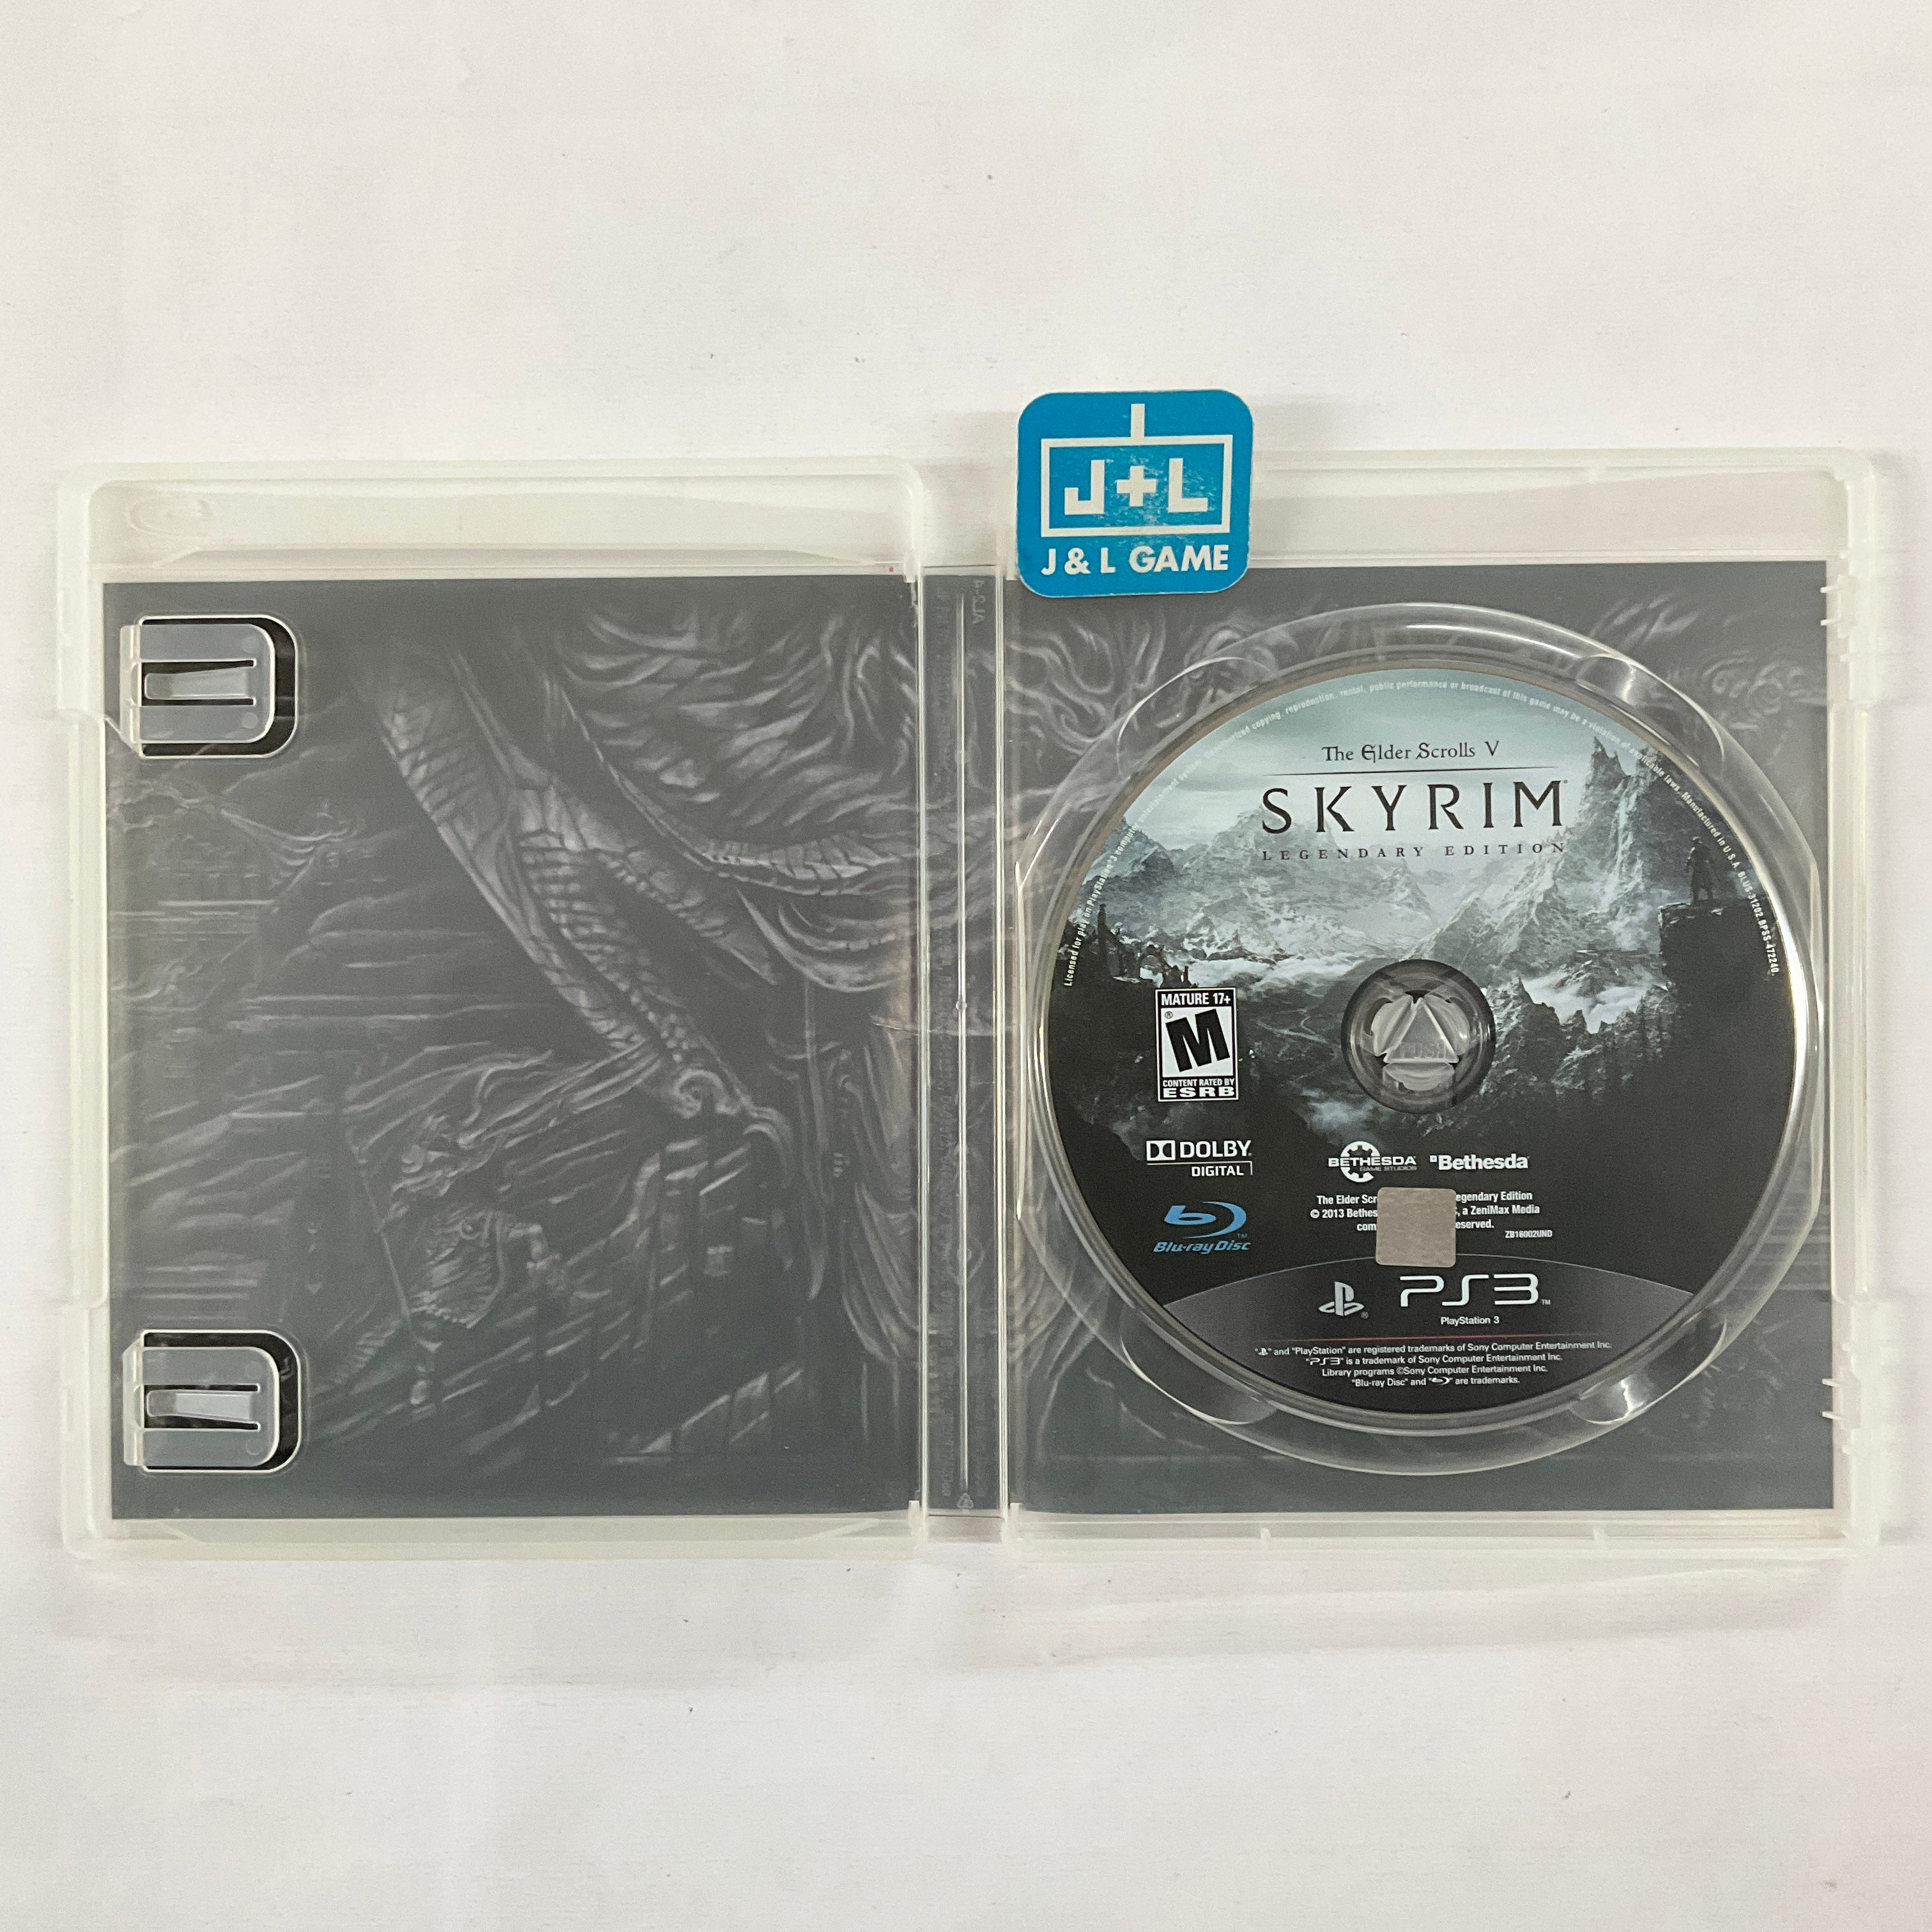 The Elder Scrolls V: Skyrim (Legendary Edition) - (PS3) Playstation 3 [Pre-Owned] Video Games Bethesda   